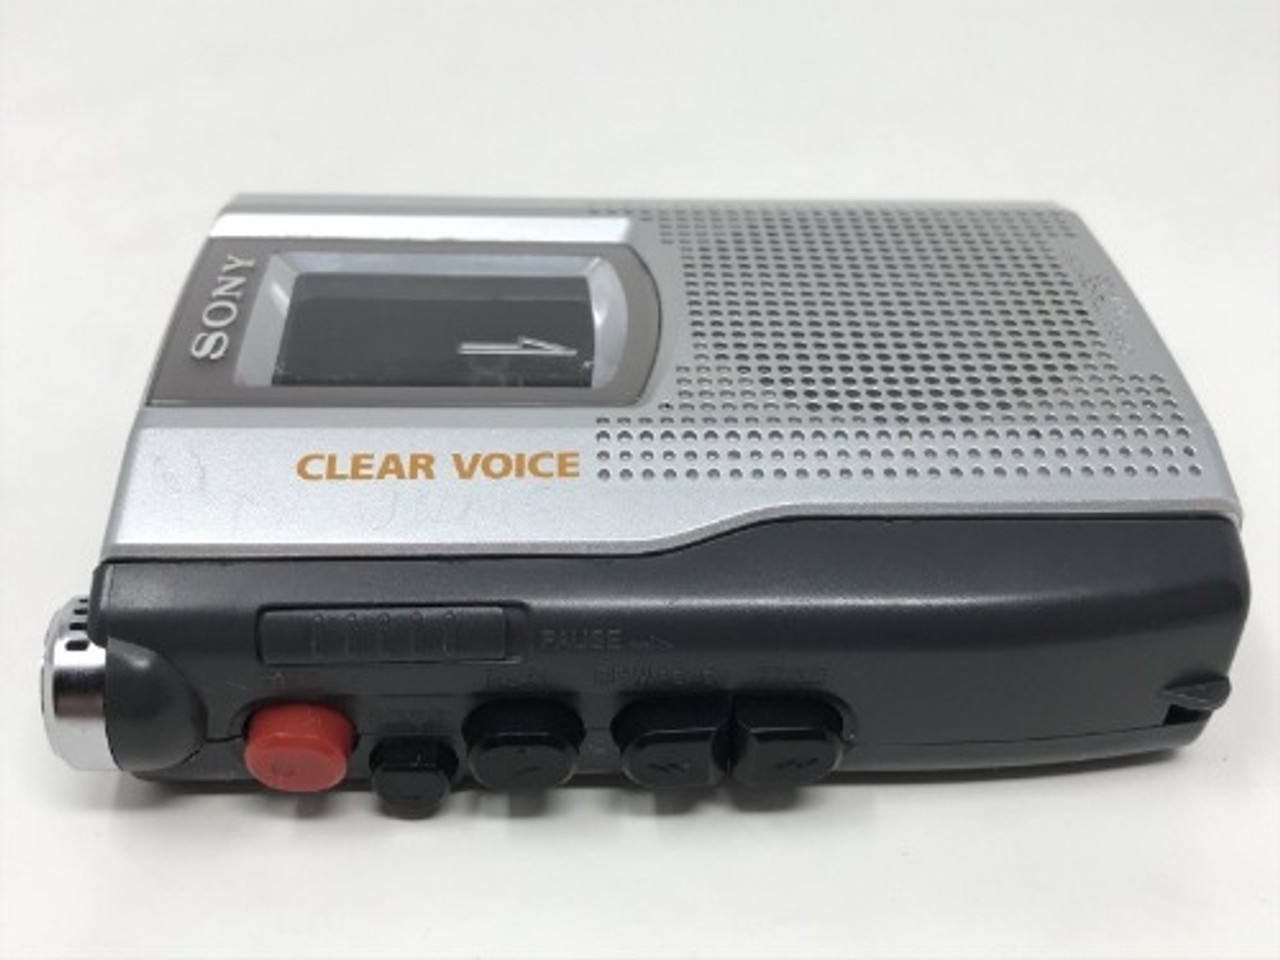 Sony TCM-150 Standard Cassette Voice Recorder controls